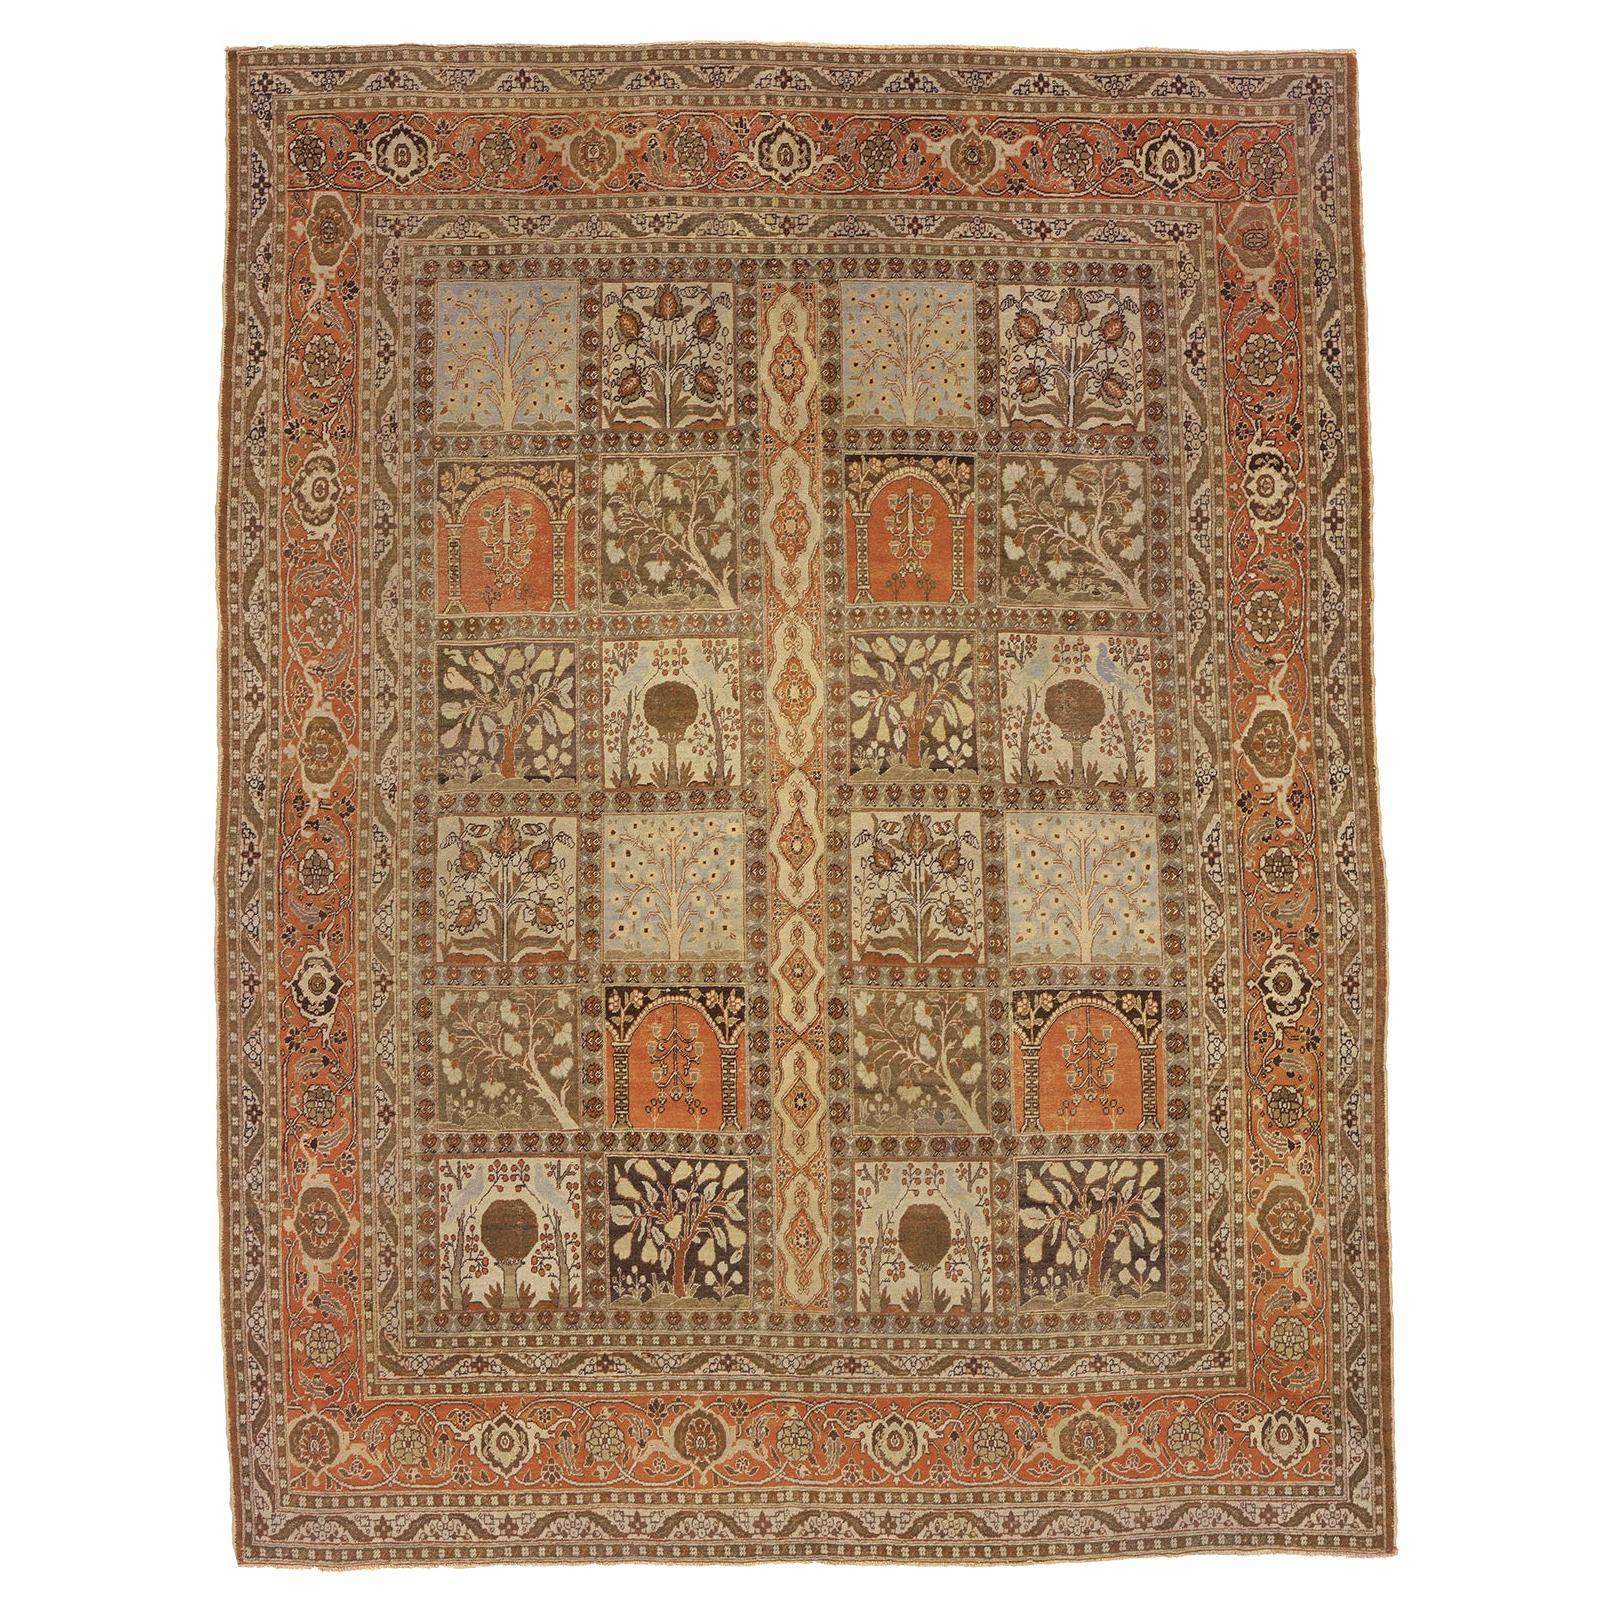 Late 19th Century Persian Tabriz Rug